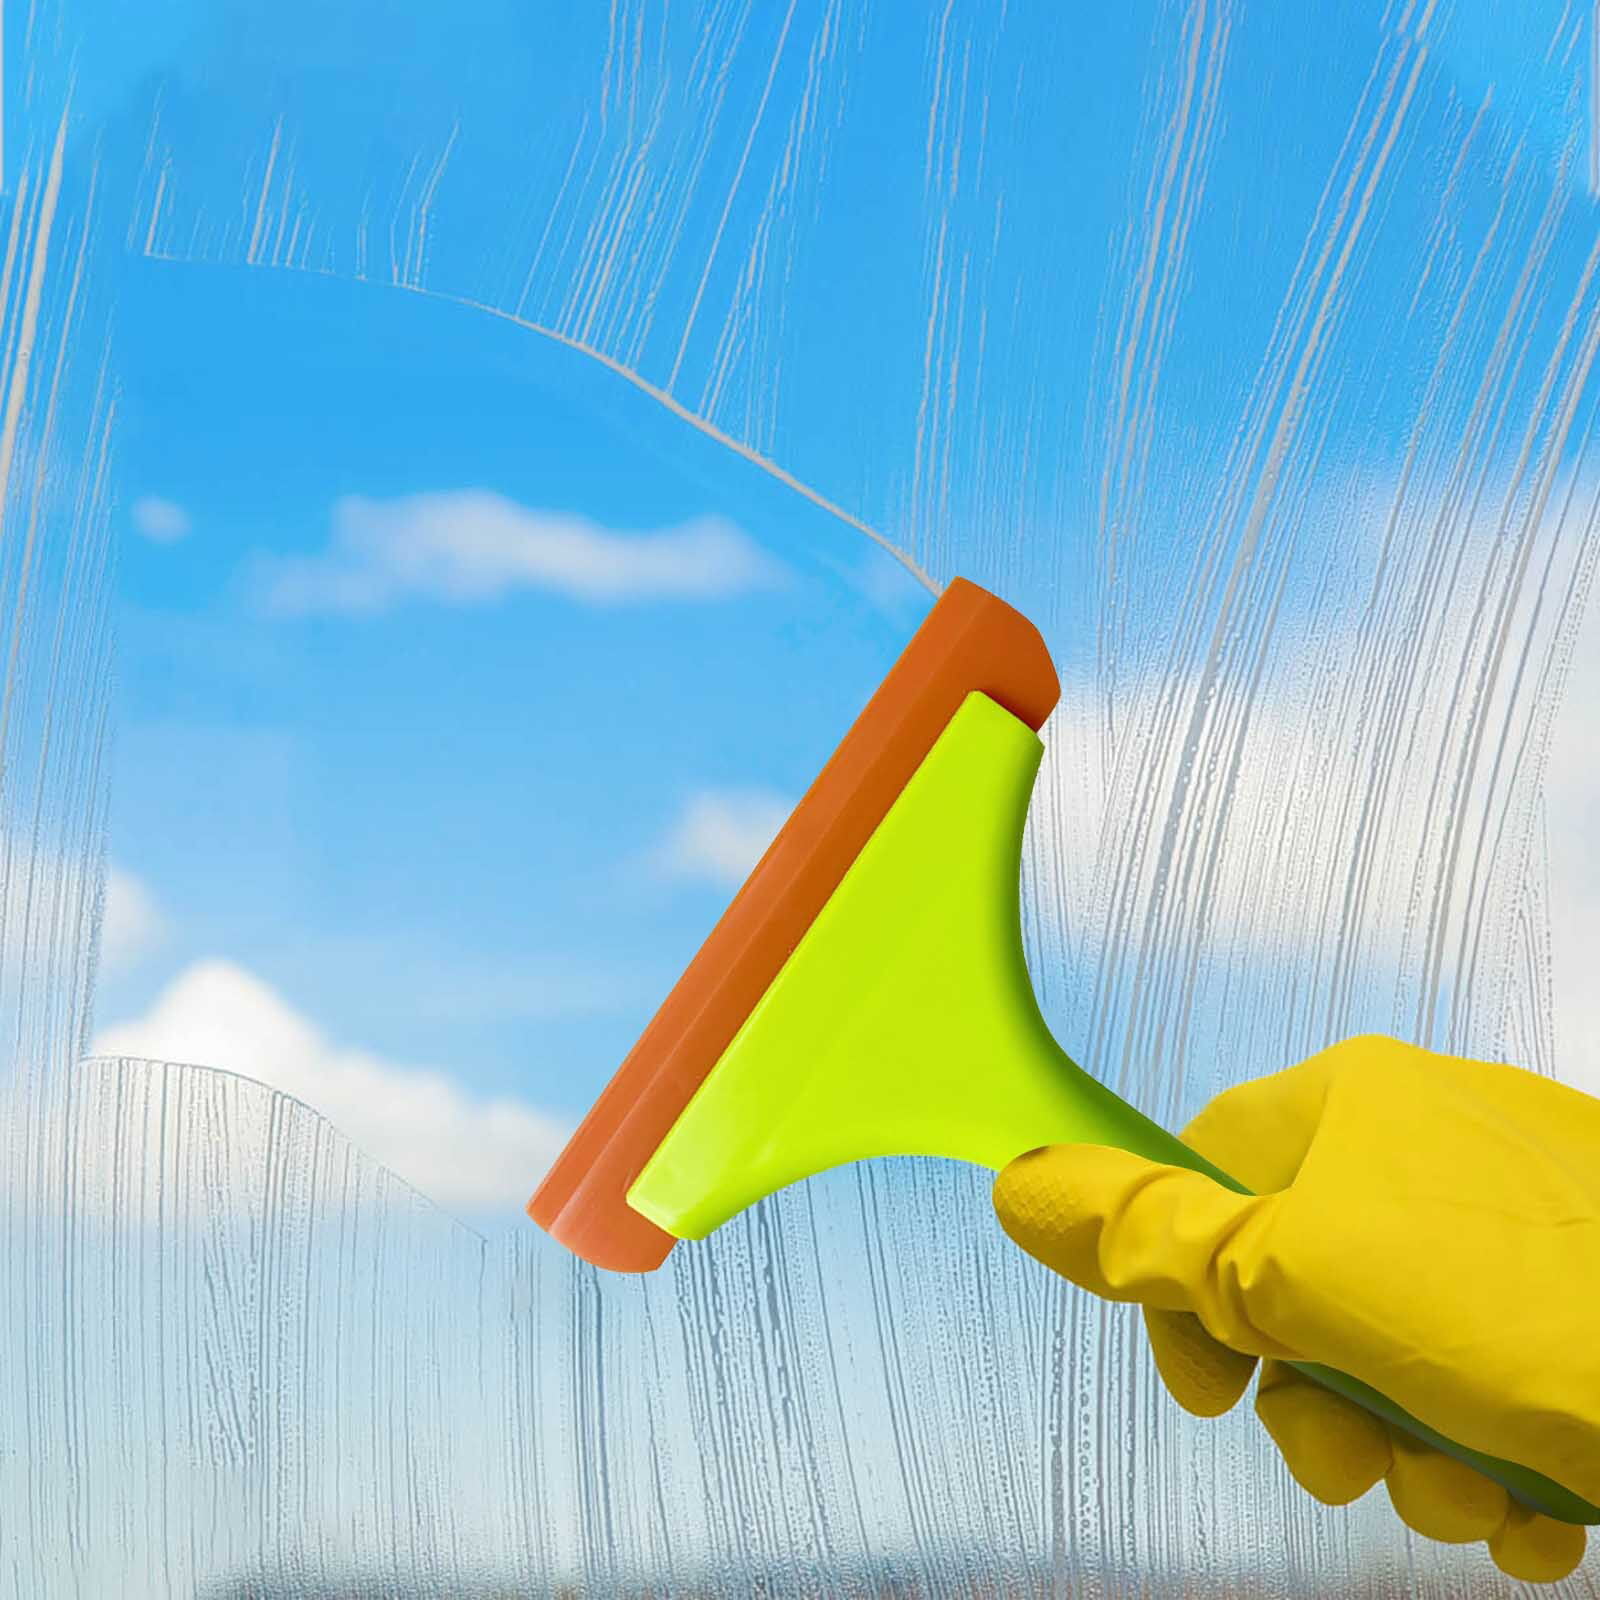 Lulshou Cleaning Supplies Super Flexible Silicone Squeegee Blades Blade Water Wiper Shower Squeegee for Car Windshield Window Mirror Glass Door on